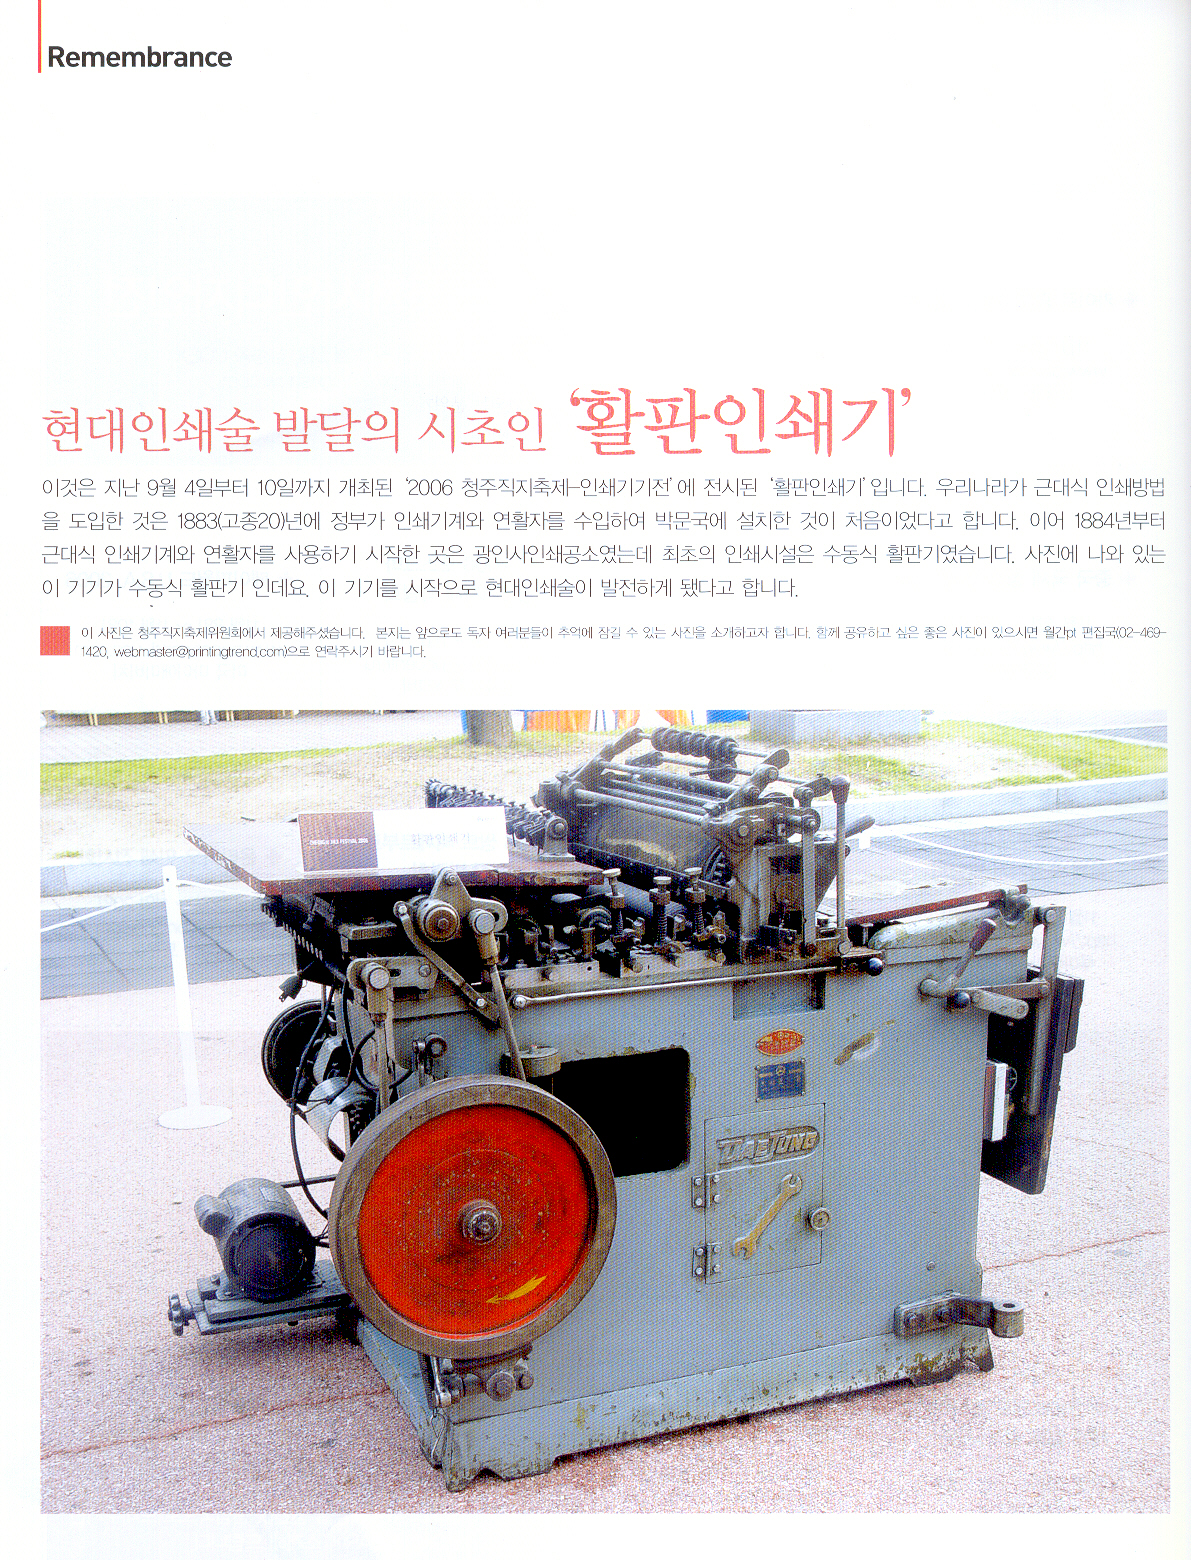 The beginning of Korean modern printing industry ( DAEJUNG offset printing machine ) image